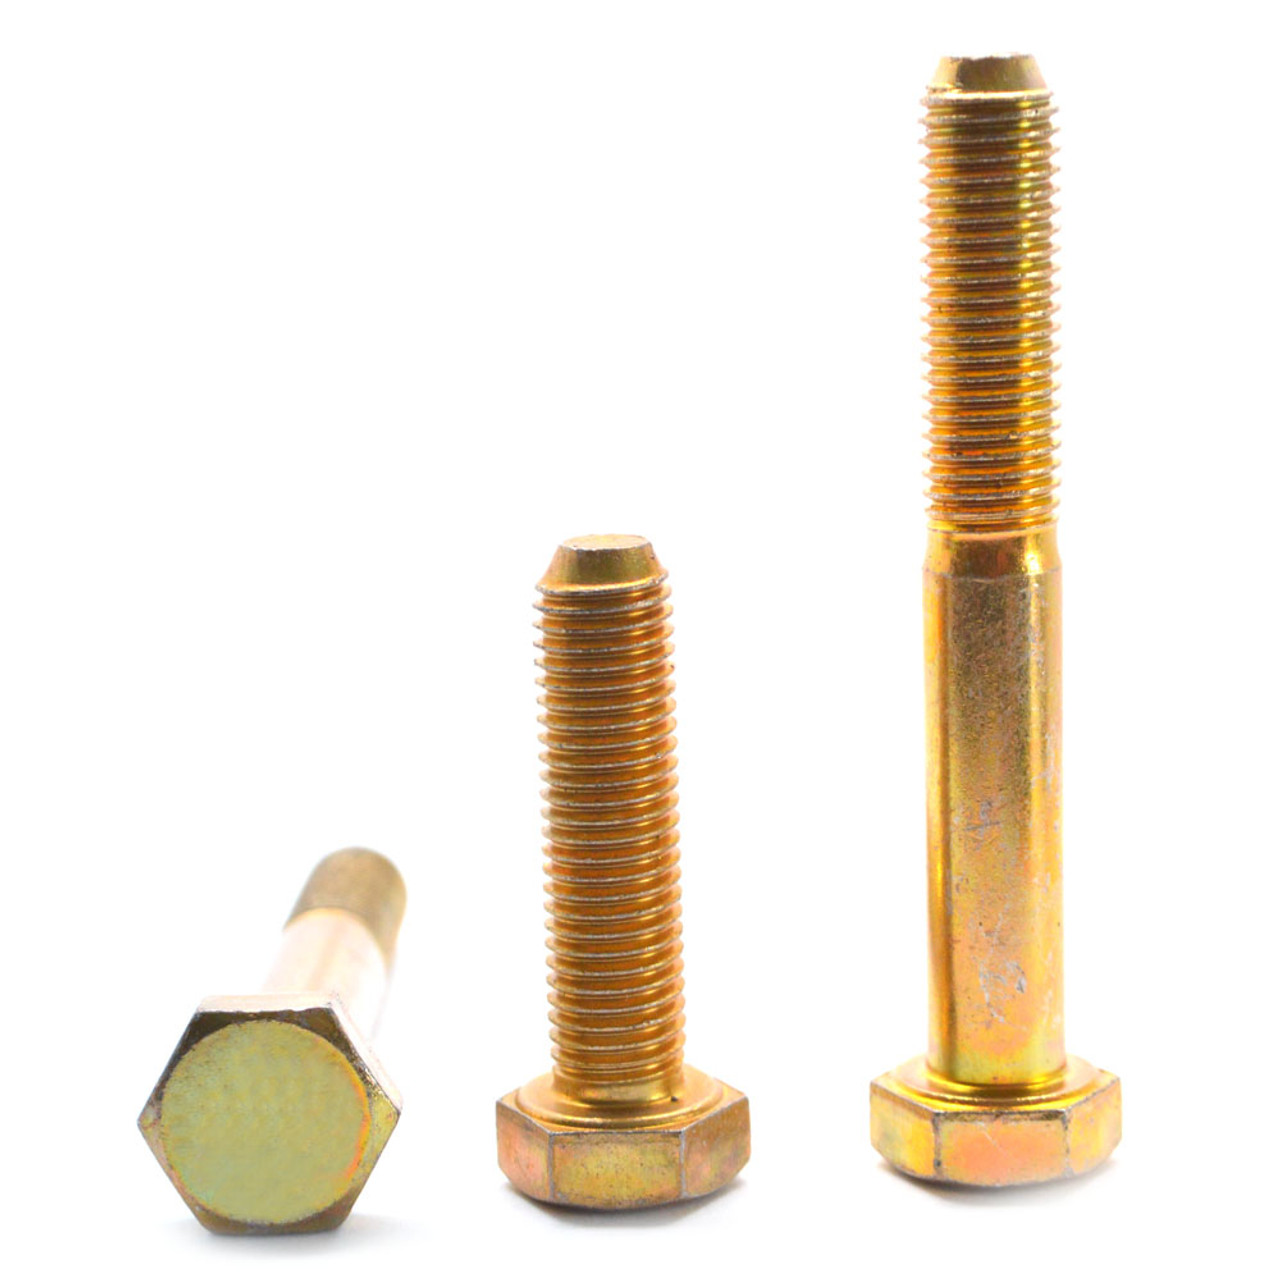 9/16"-12 x 1" (FT) Coarse Thread Grade 8 Hex Cap Screw (Bolt) Alloy Steel Yellow Zinc Plated